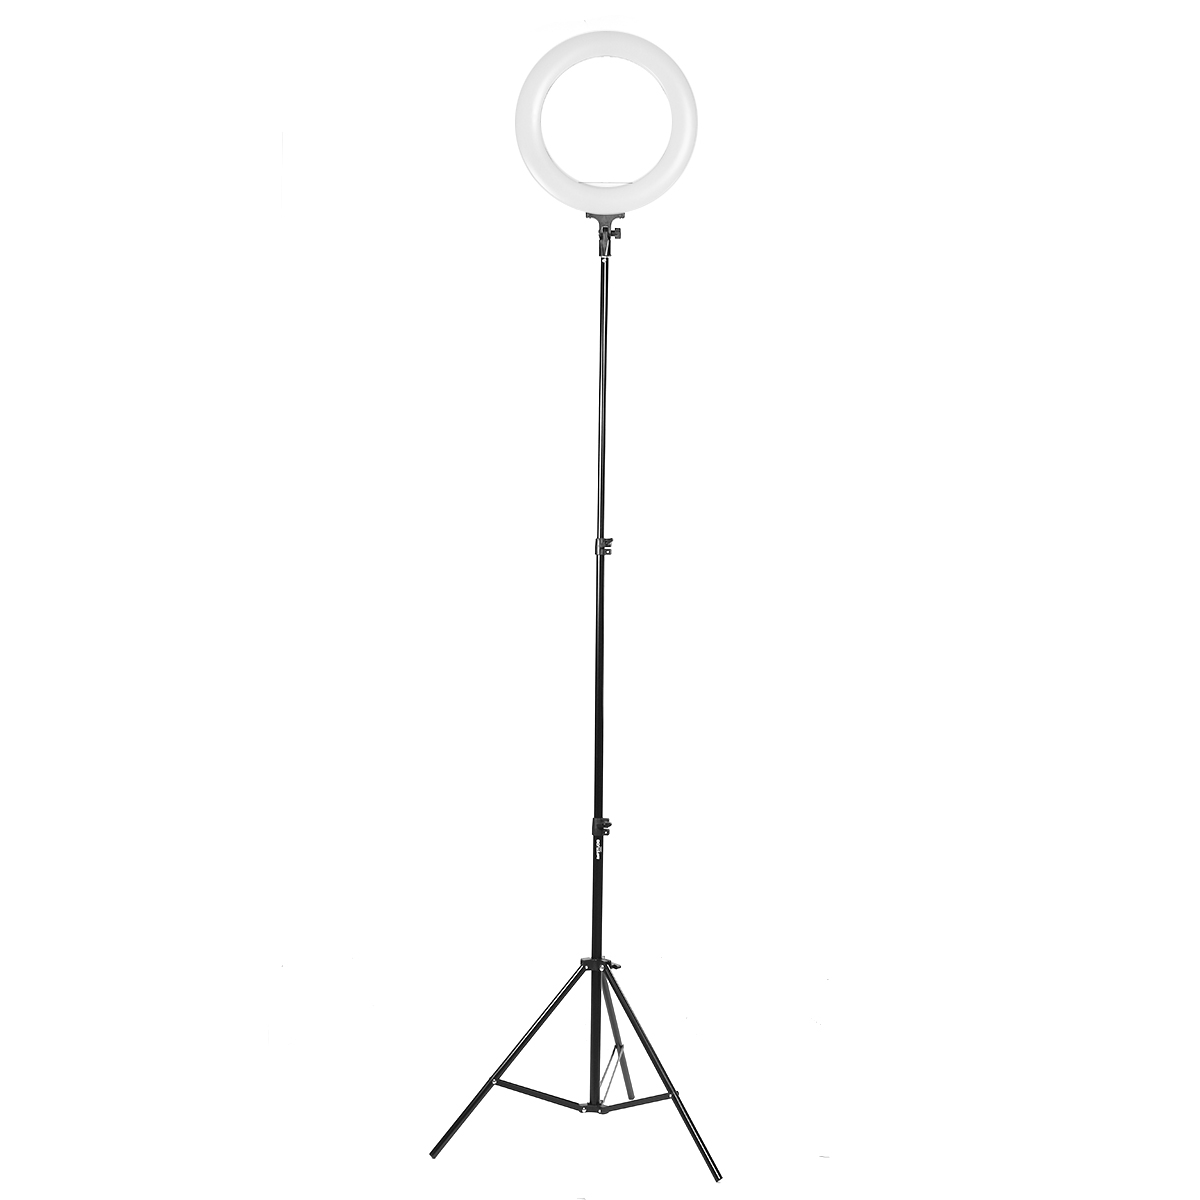 170cm-17M-Foldable-Video-Ring-Light-Flash-Light-Holder-Stand-Tripod-for-Youtube-Tik-Tok-Live-Streami-1626557